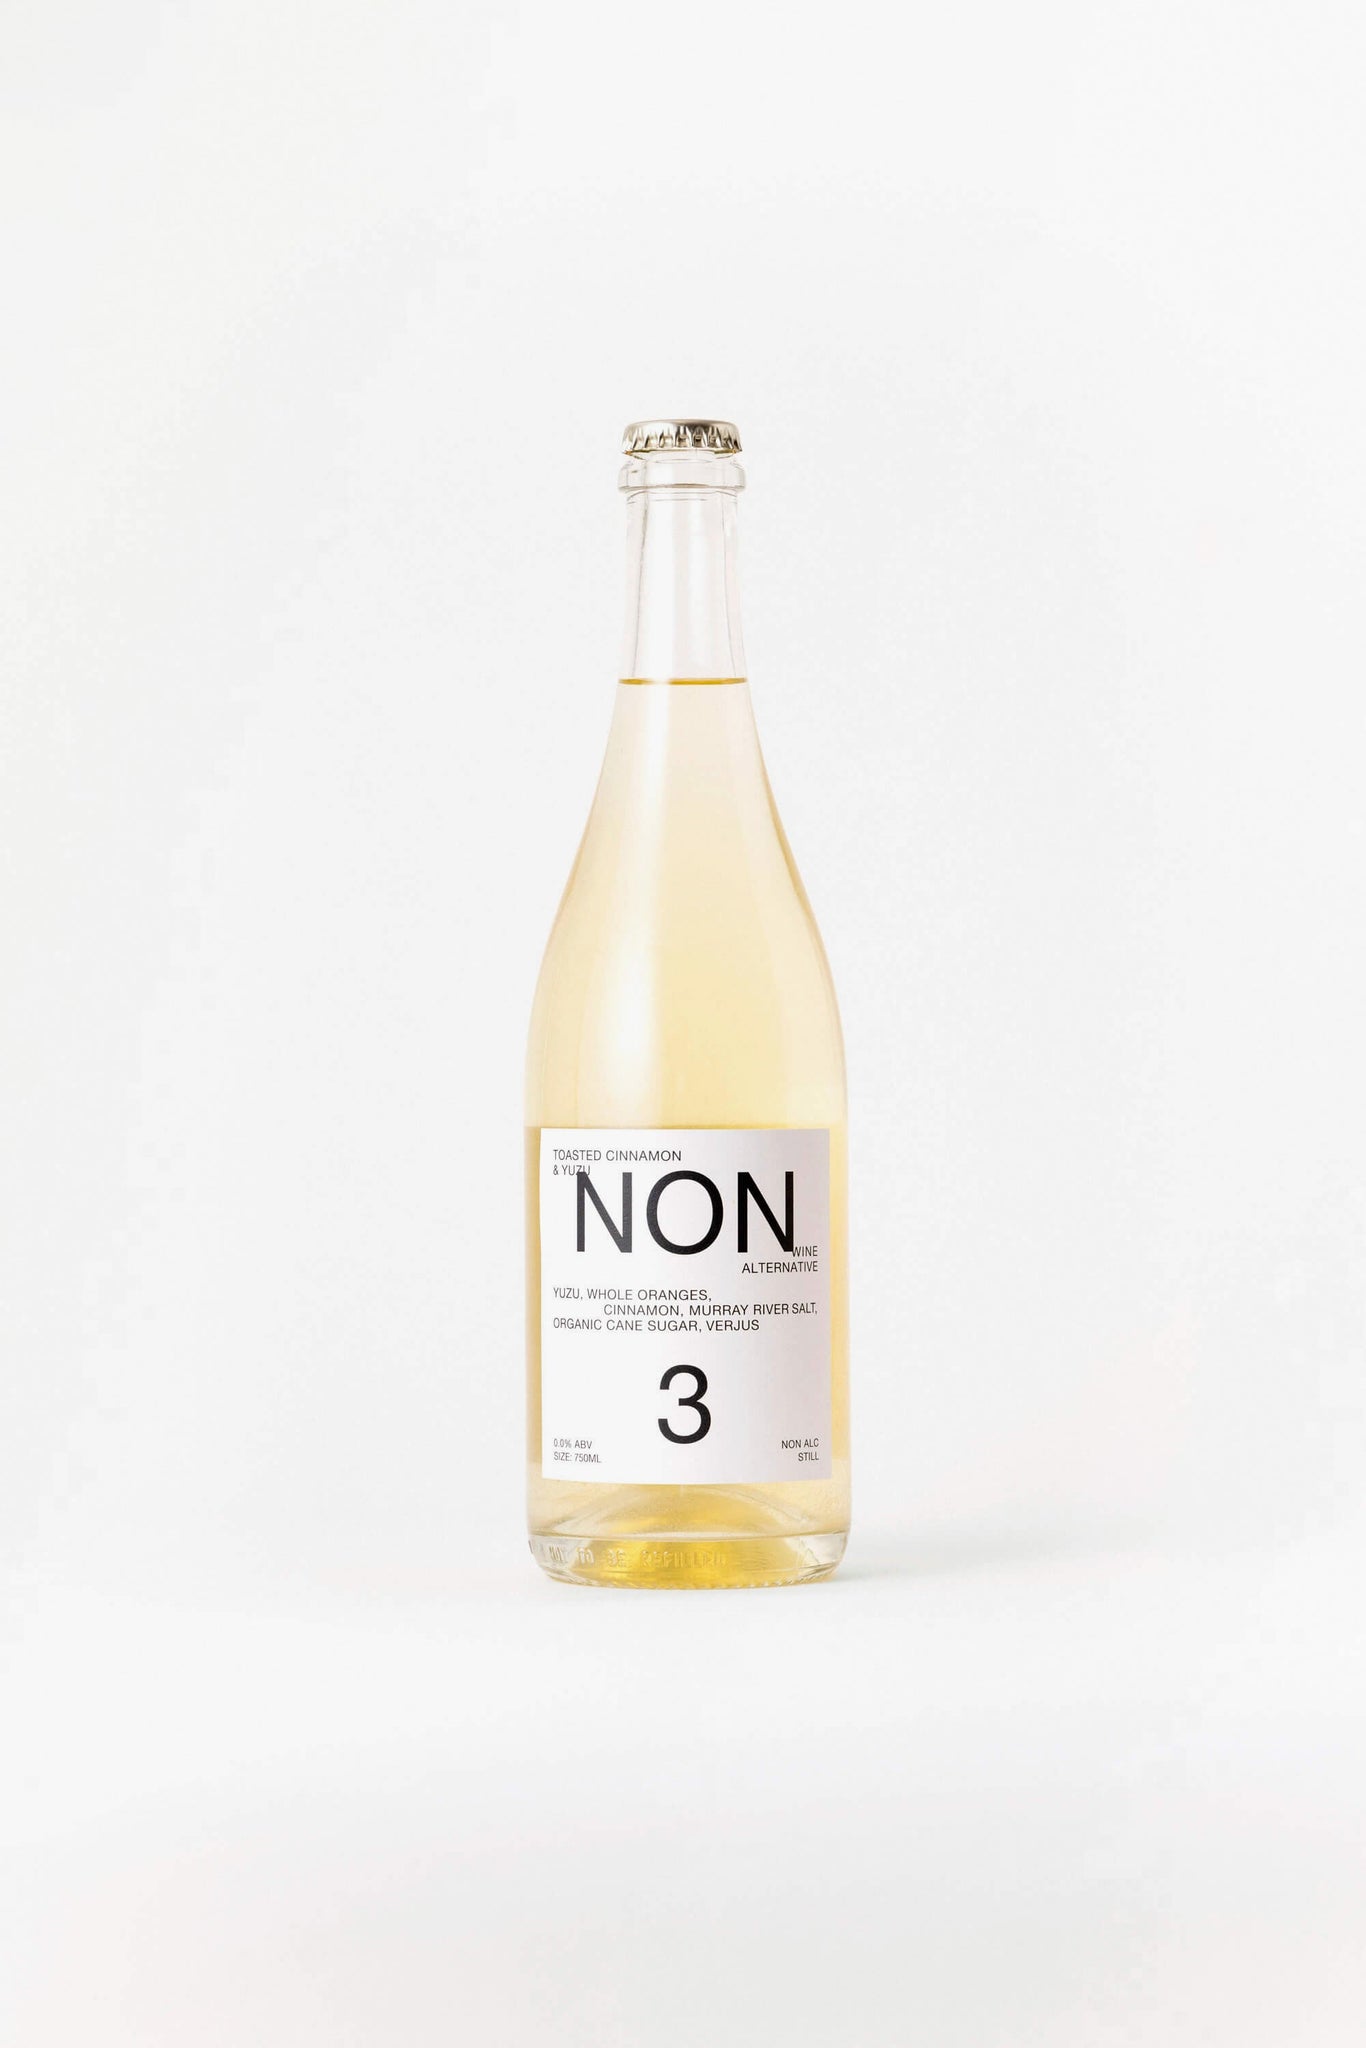 NON3 Toasted Cinnamon & Yuzu Bottle front label